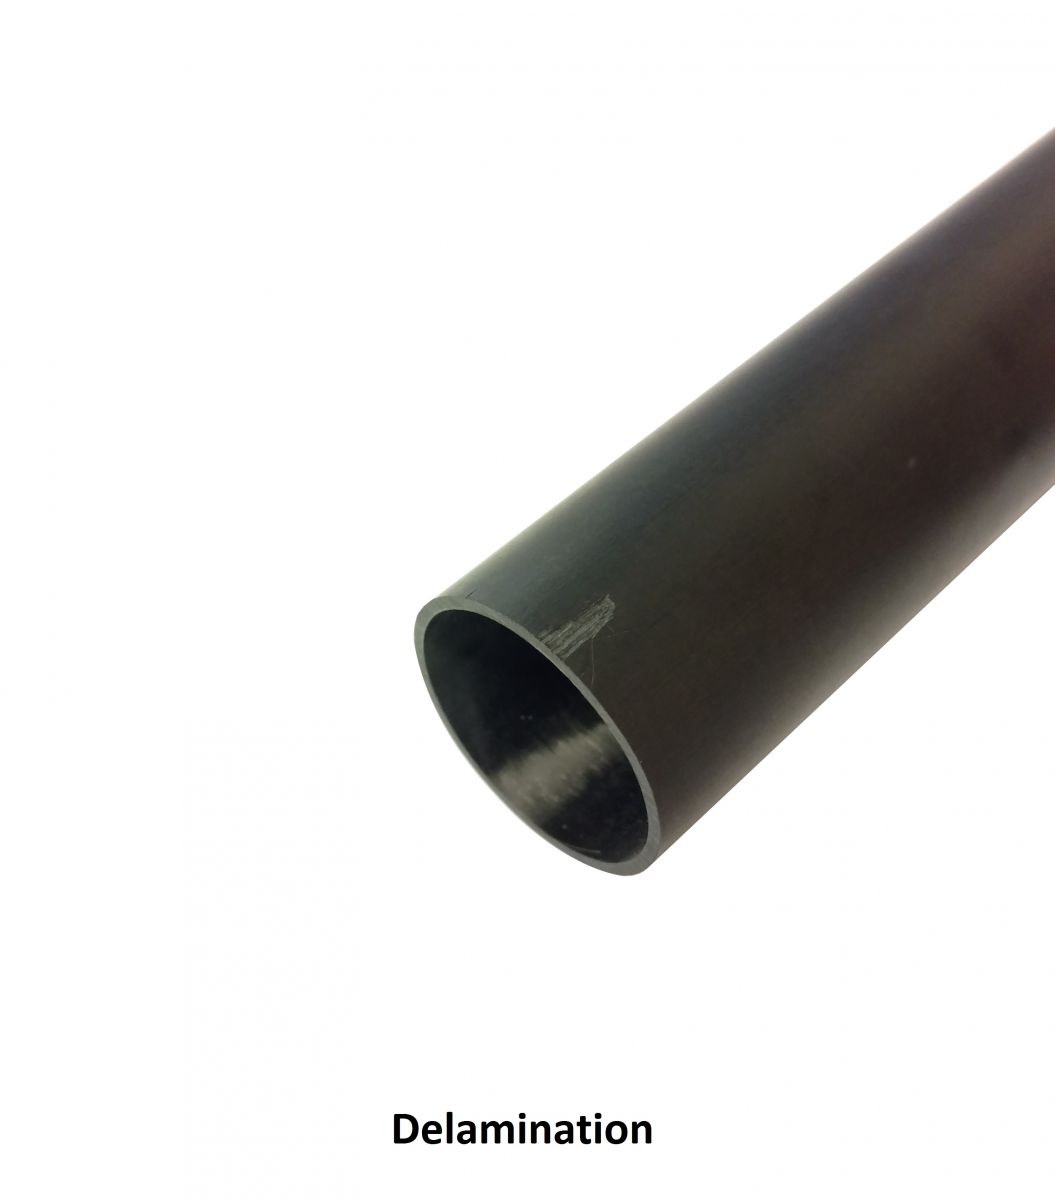 Delaminating a carbon fiber tube